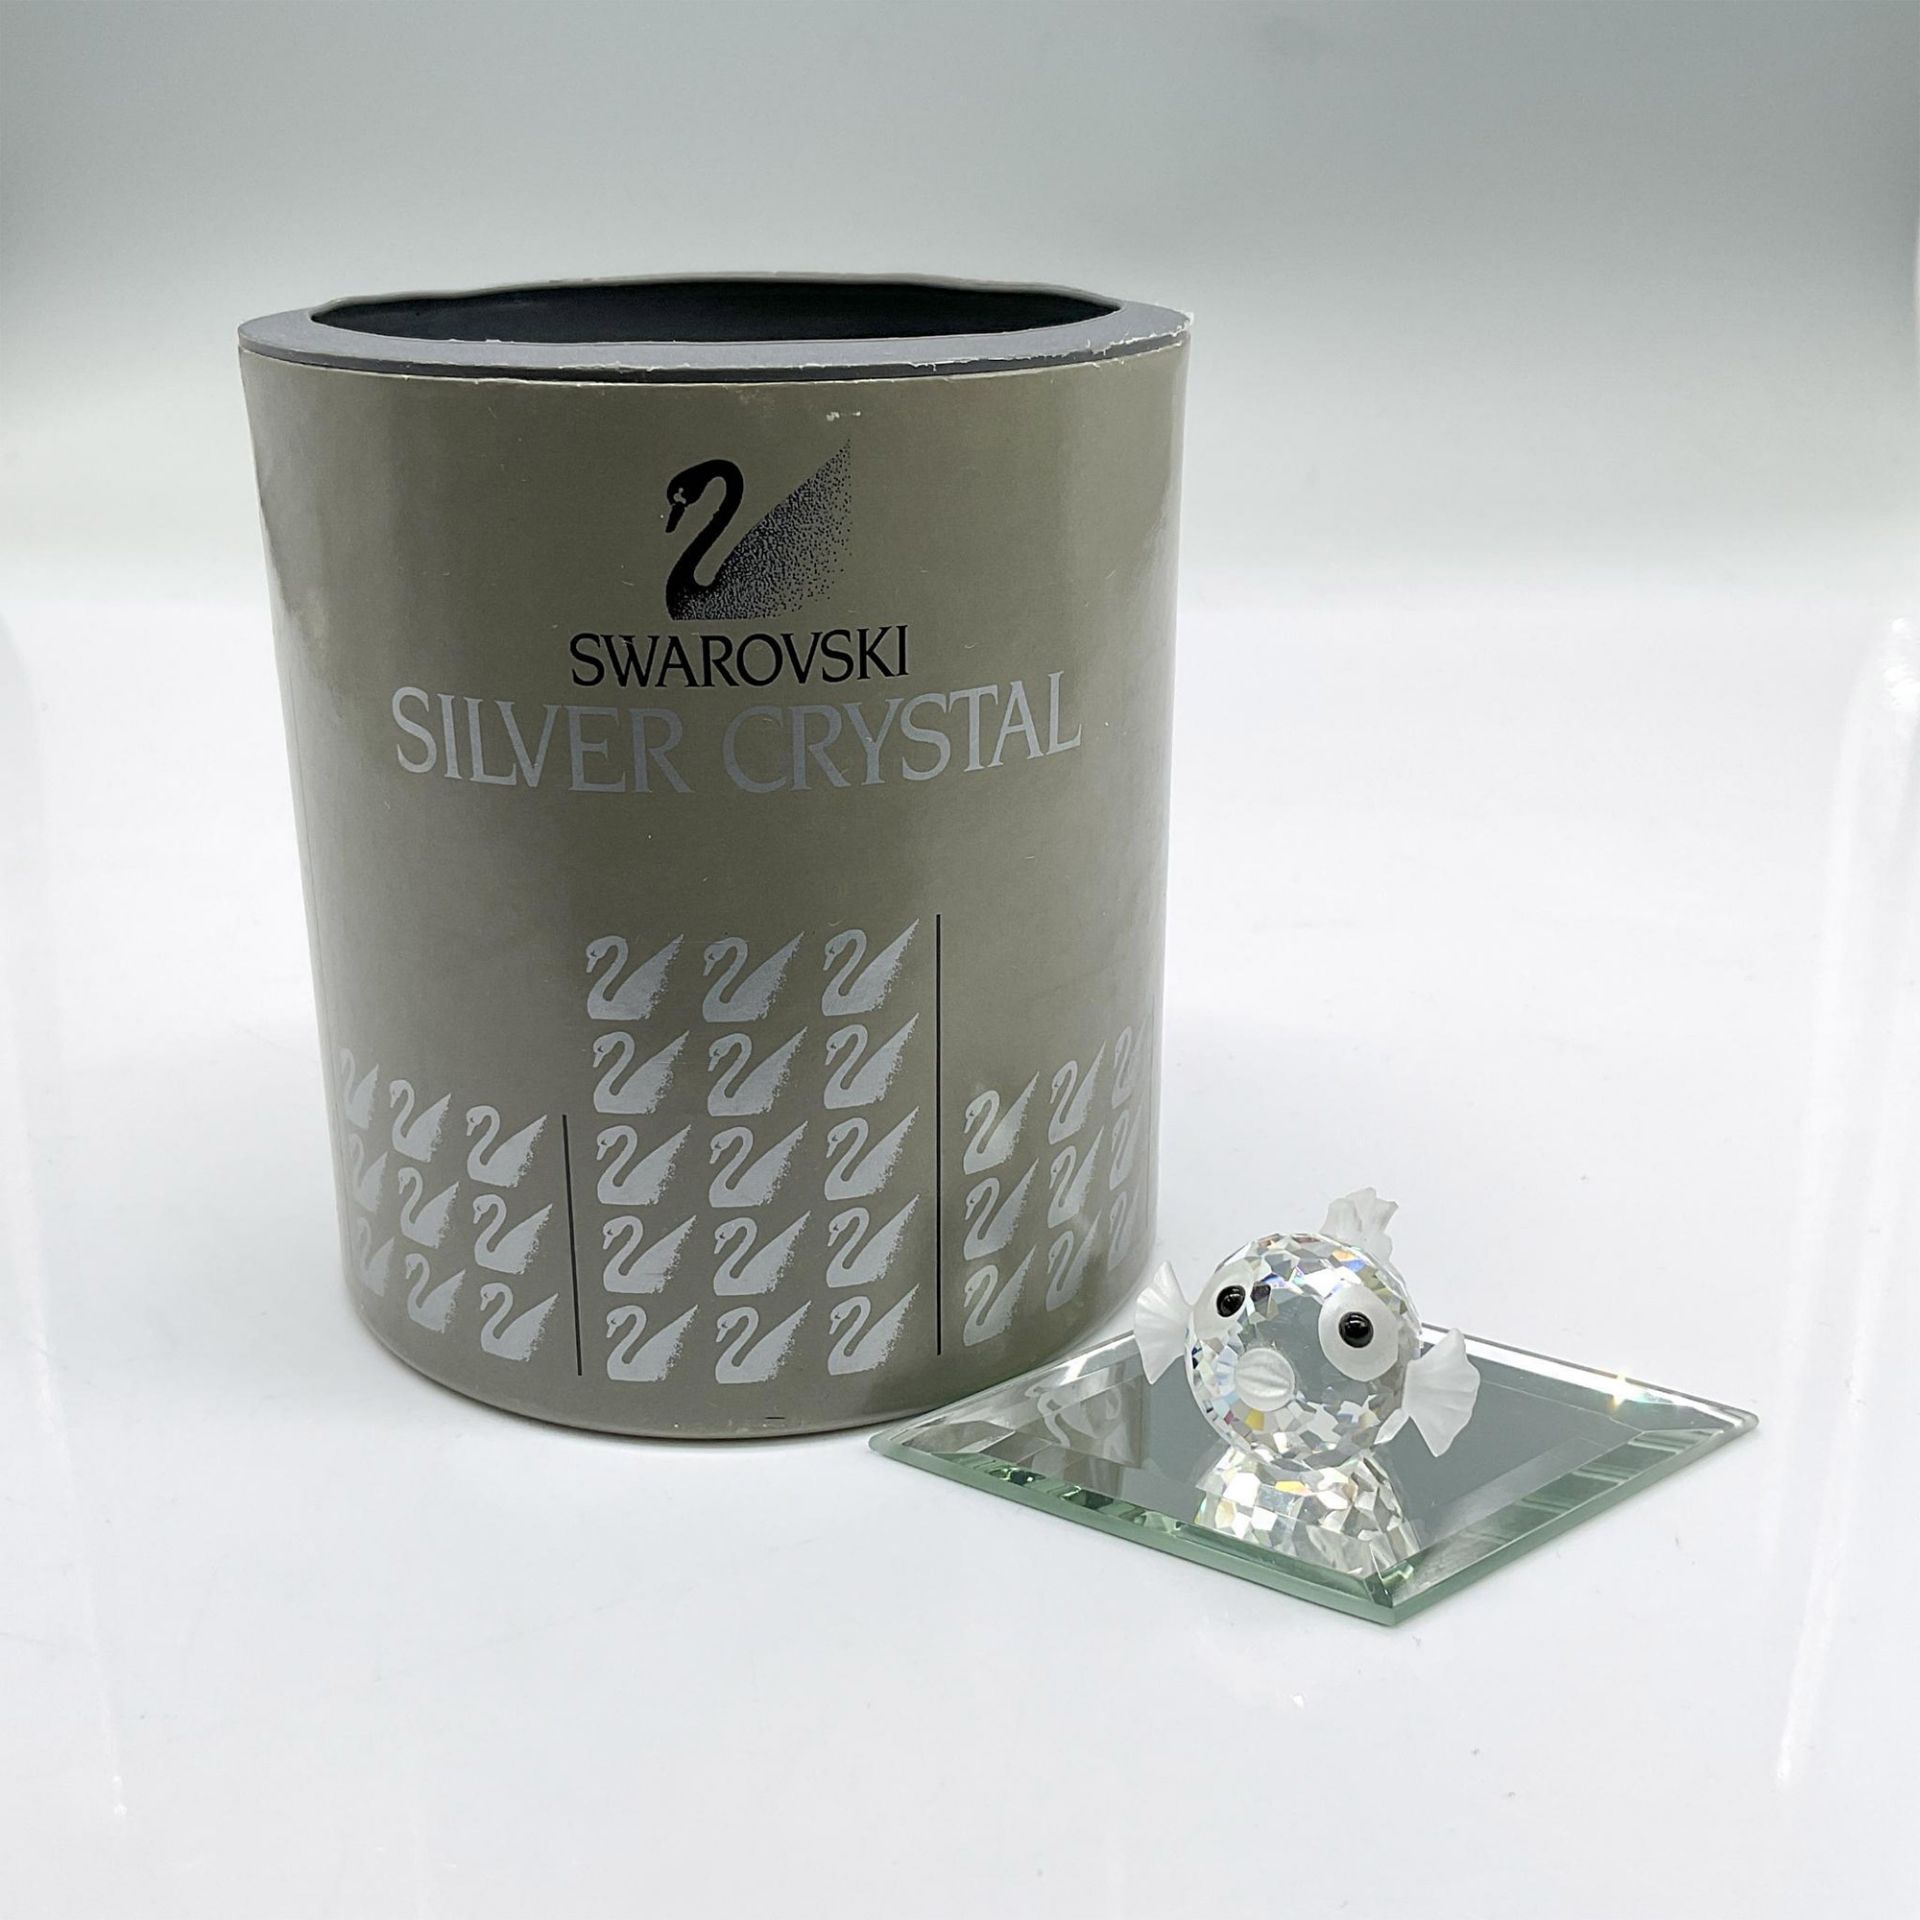 Swarovski Silver Crystal Figurine, Mini Blowfish - Image 5 of 5